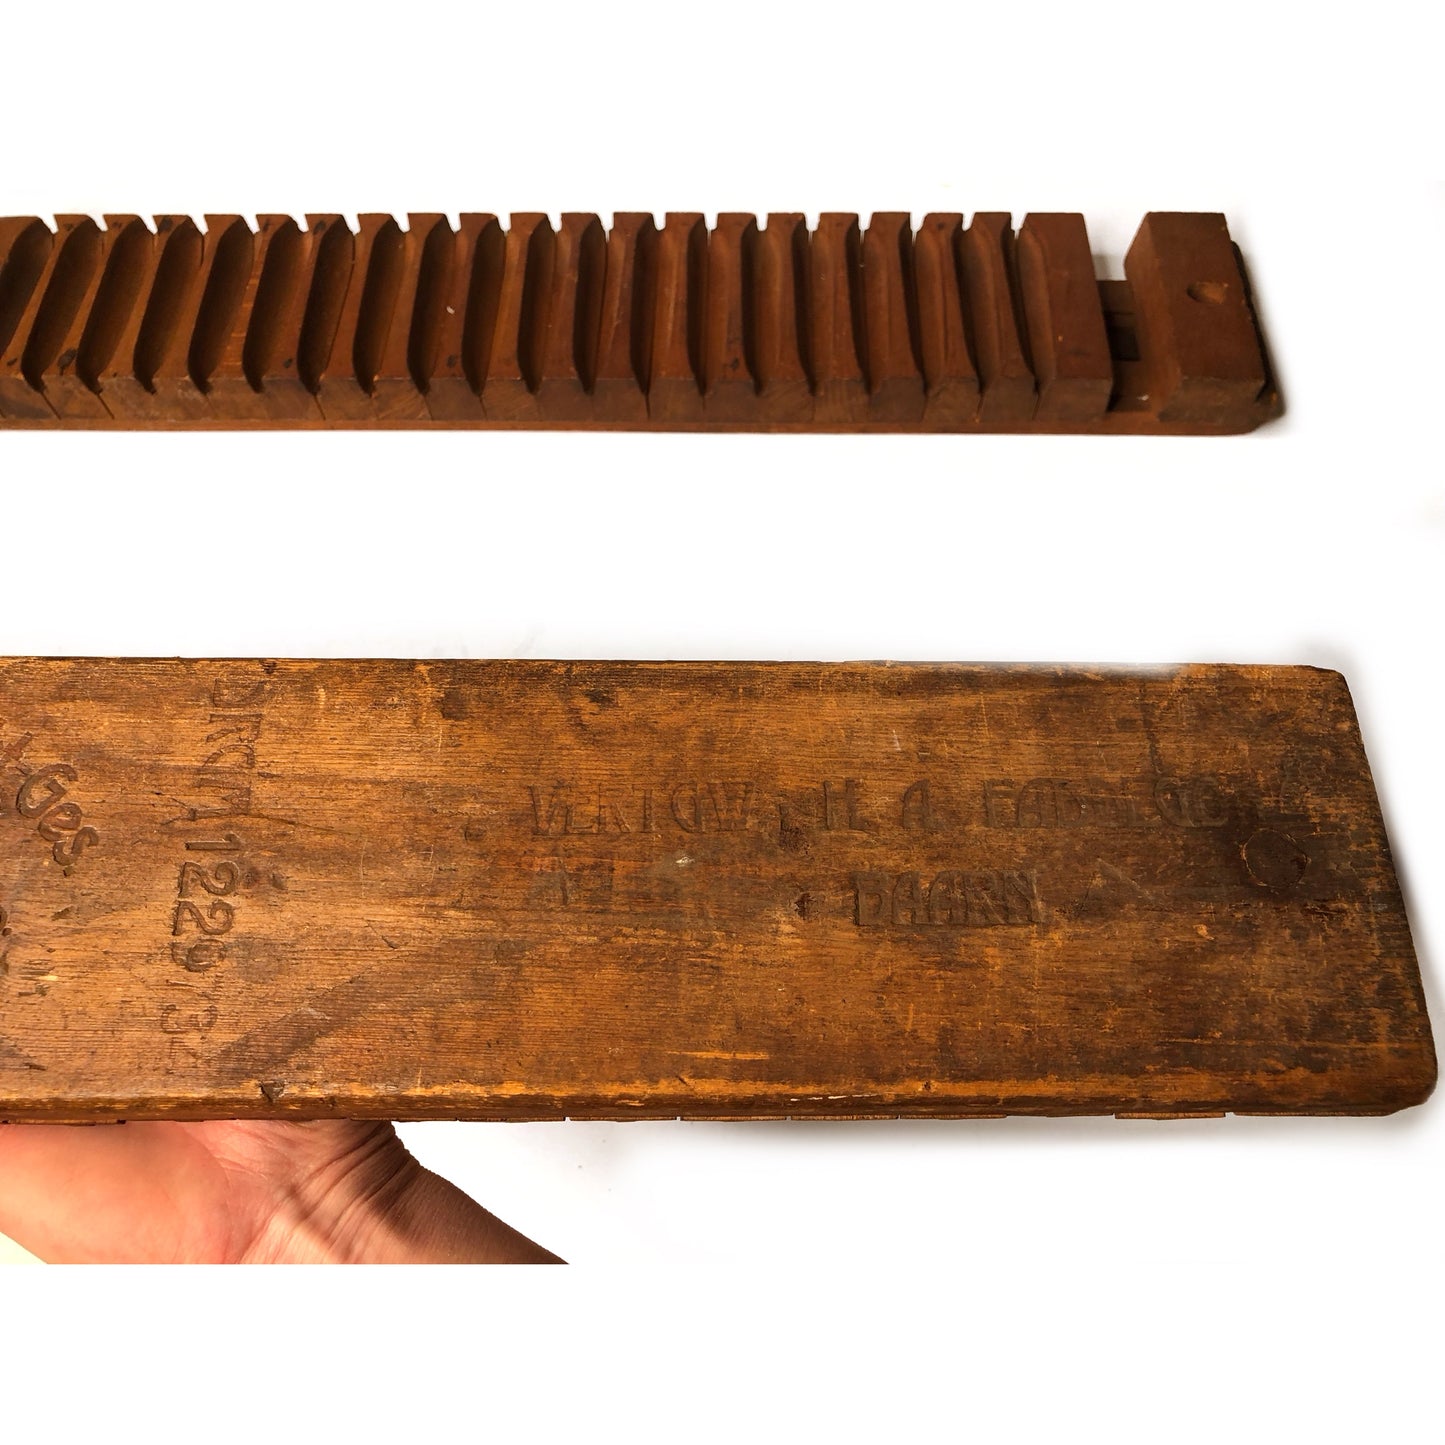 Antique cigar press or mold Carl Intelman Dutch or German origin 20 cigars